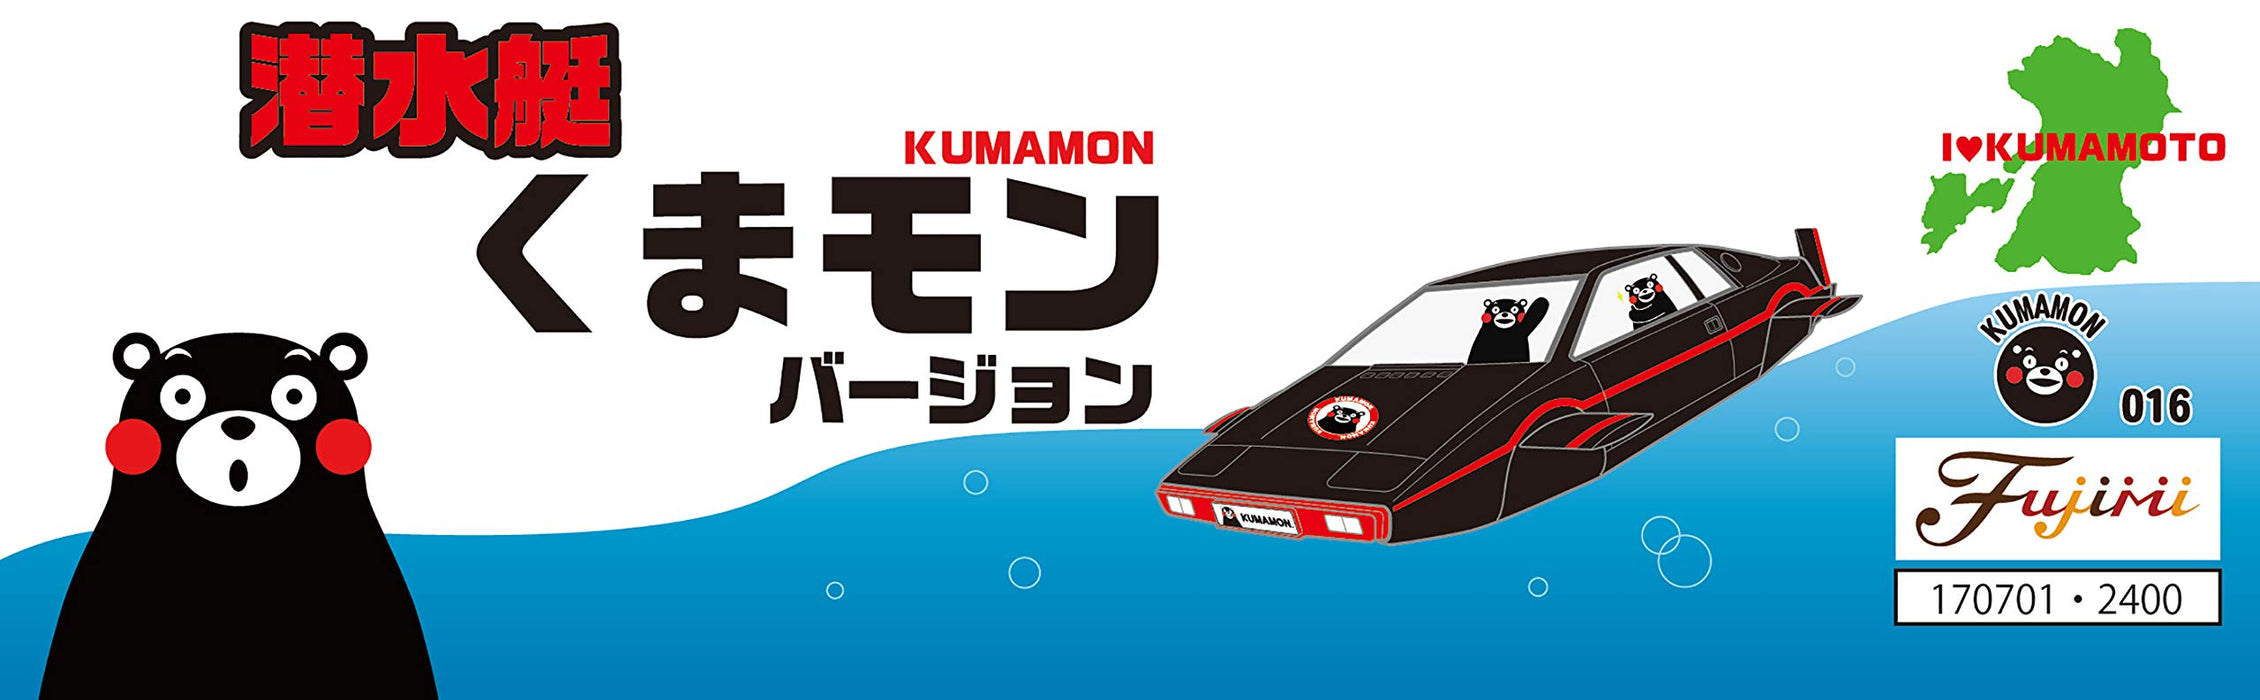 Fujimi 170701 Kumamon Submersible Japanese Non-Scale Figures Character Toys